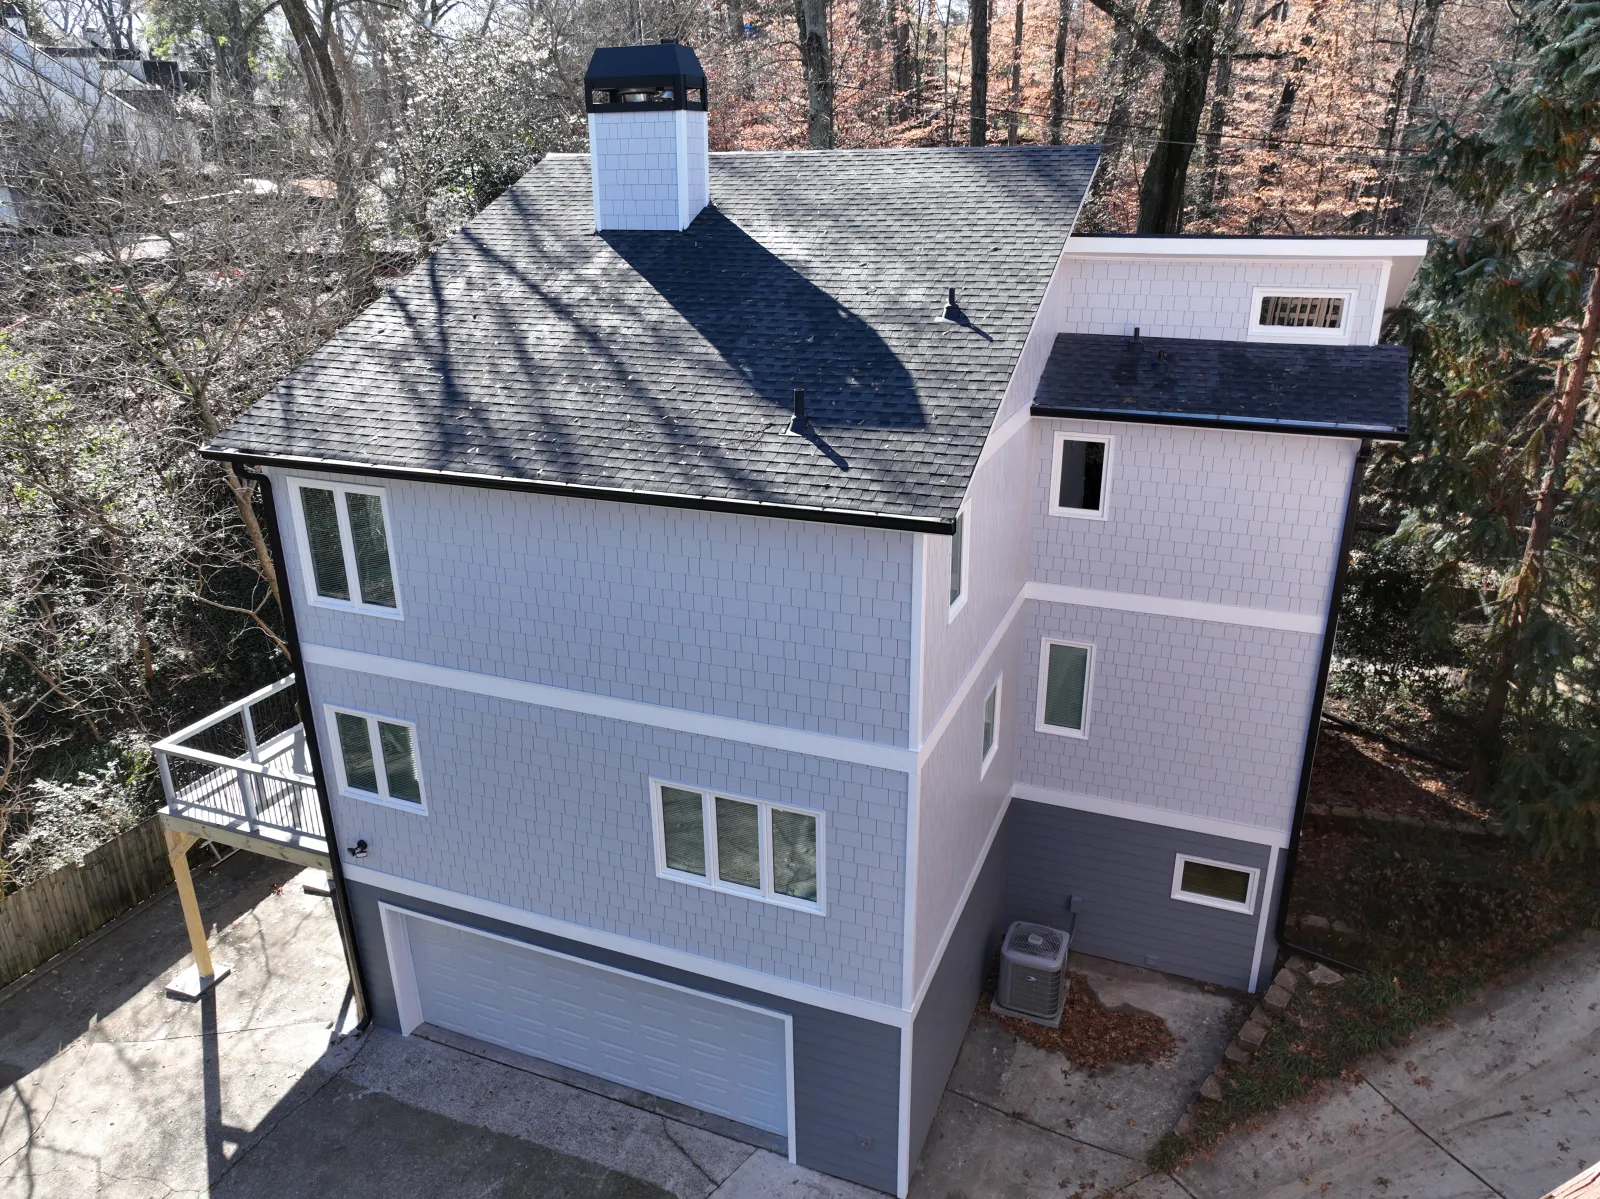 a house with a solar panel